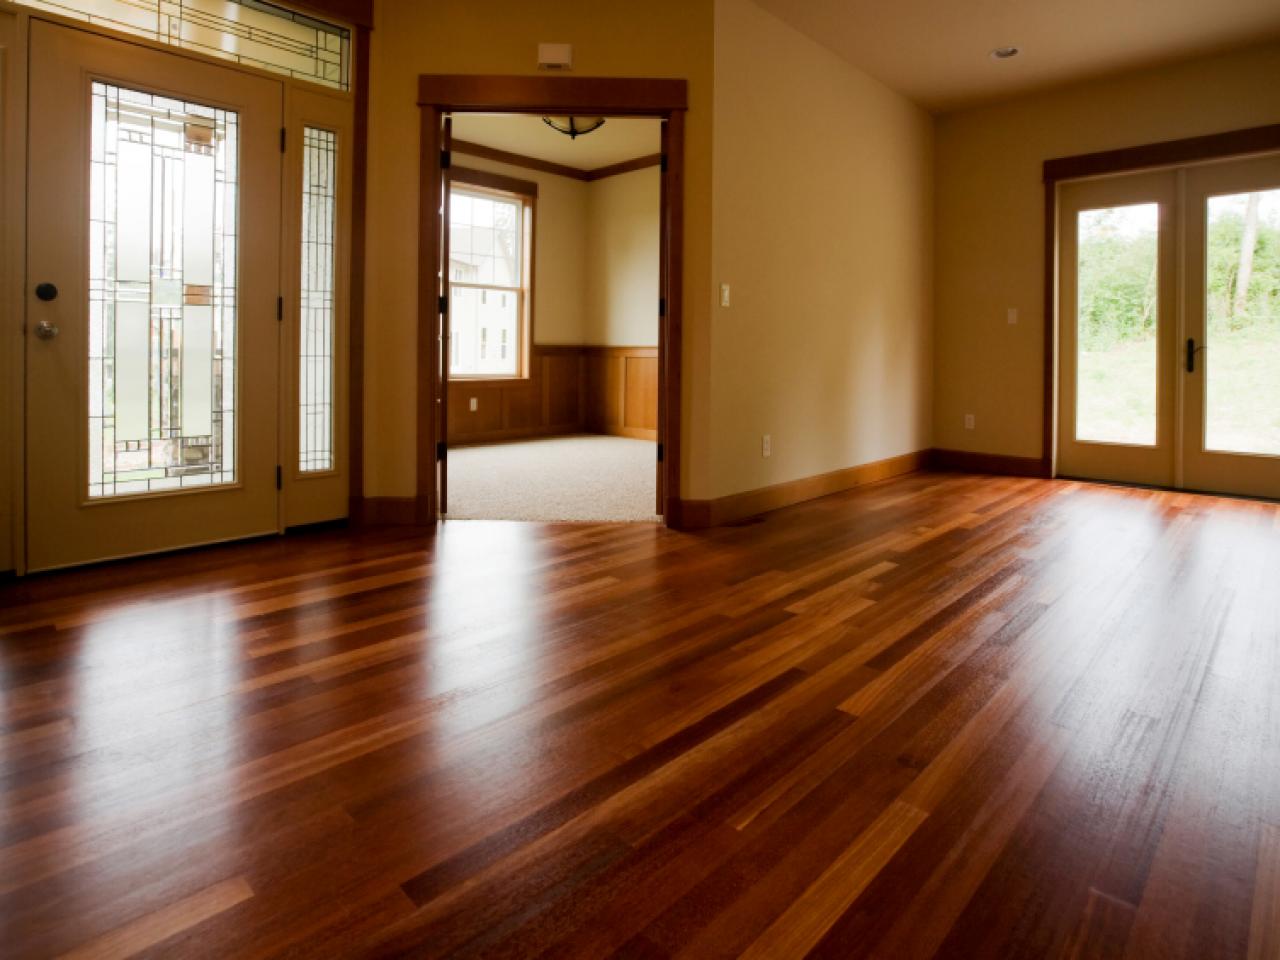 Cleaning Tile Wood And Vinyl Floors, Cleaning Hardwood Floors With White Vinegar